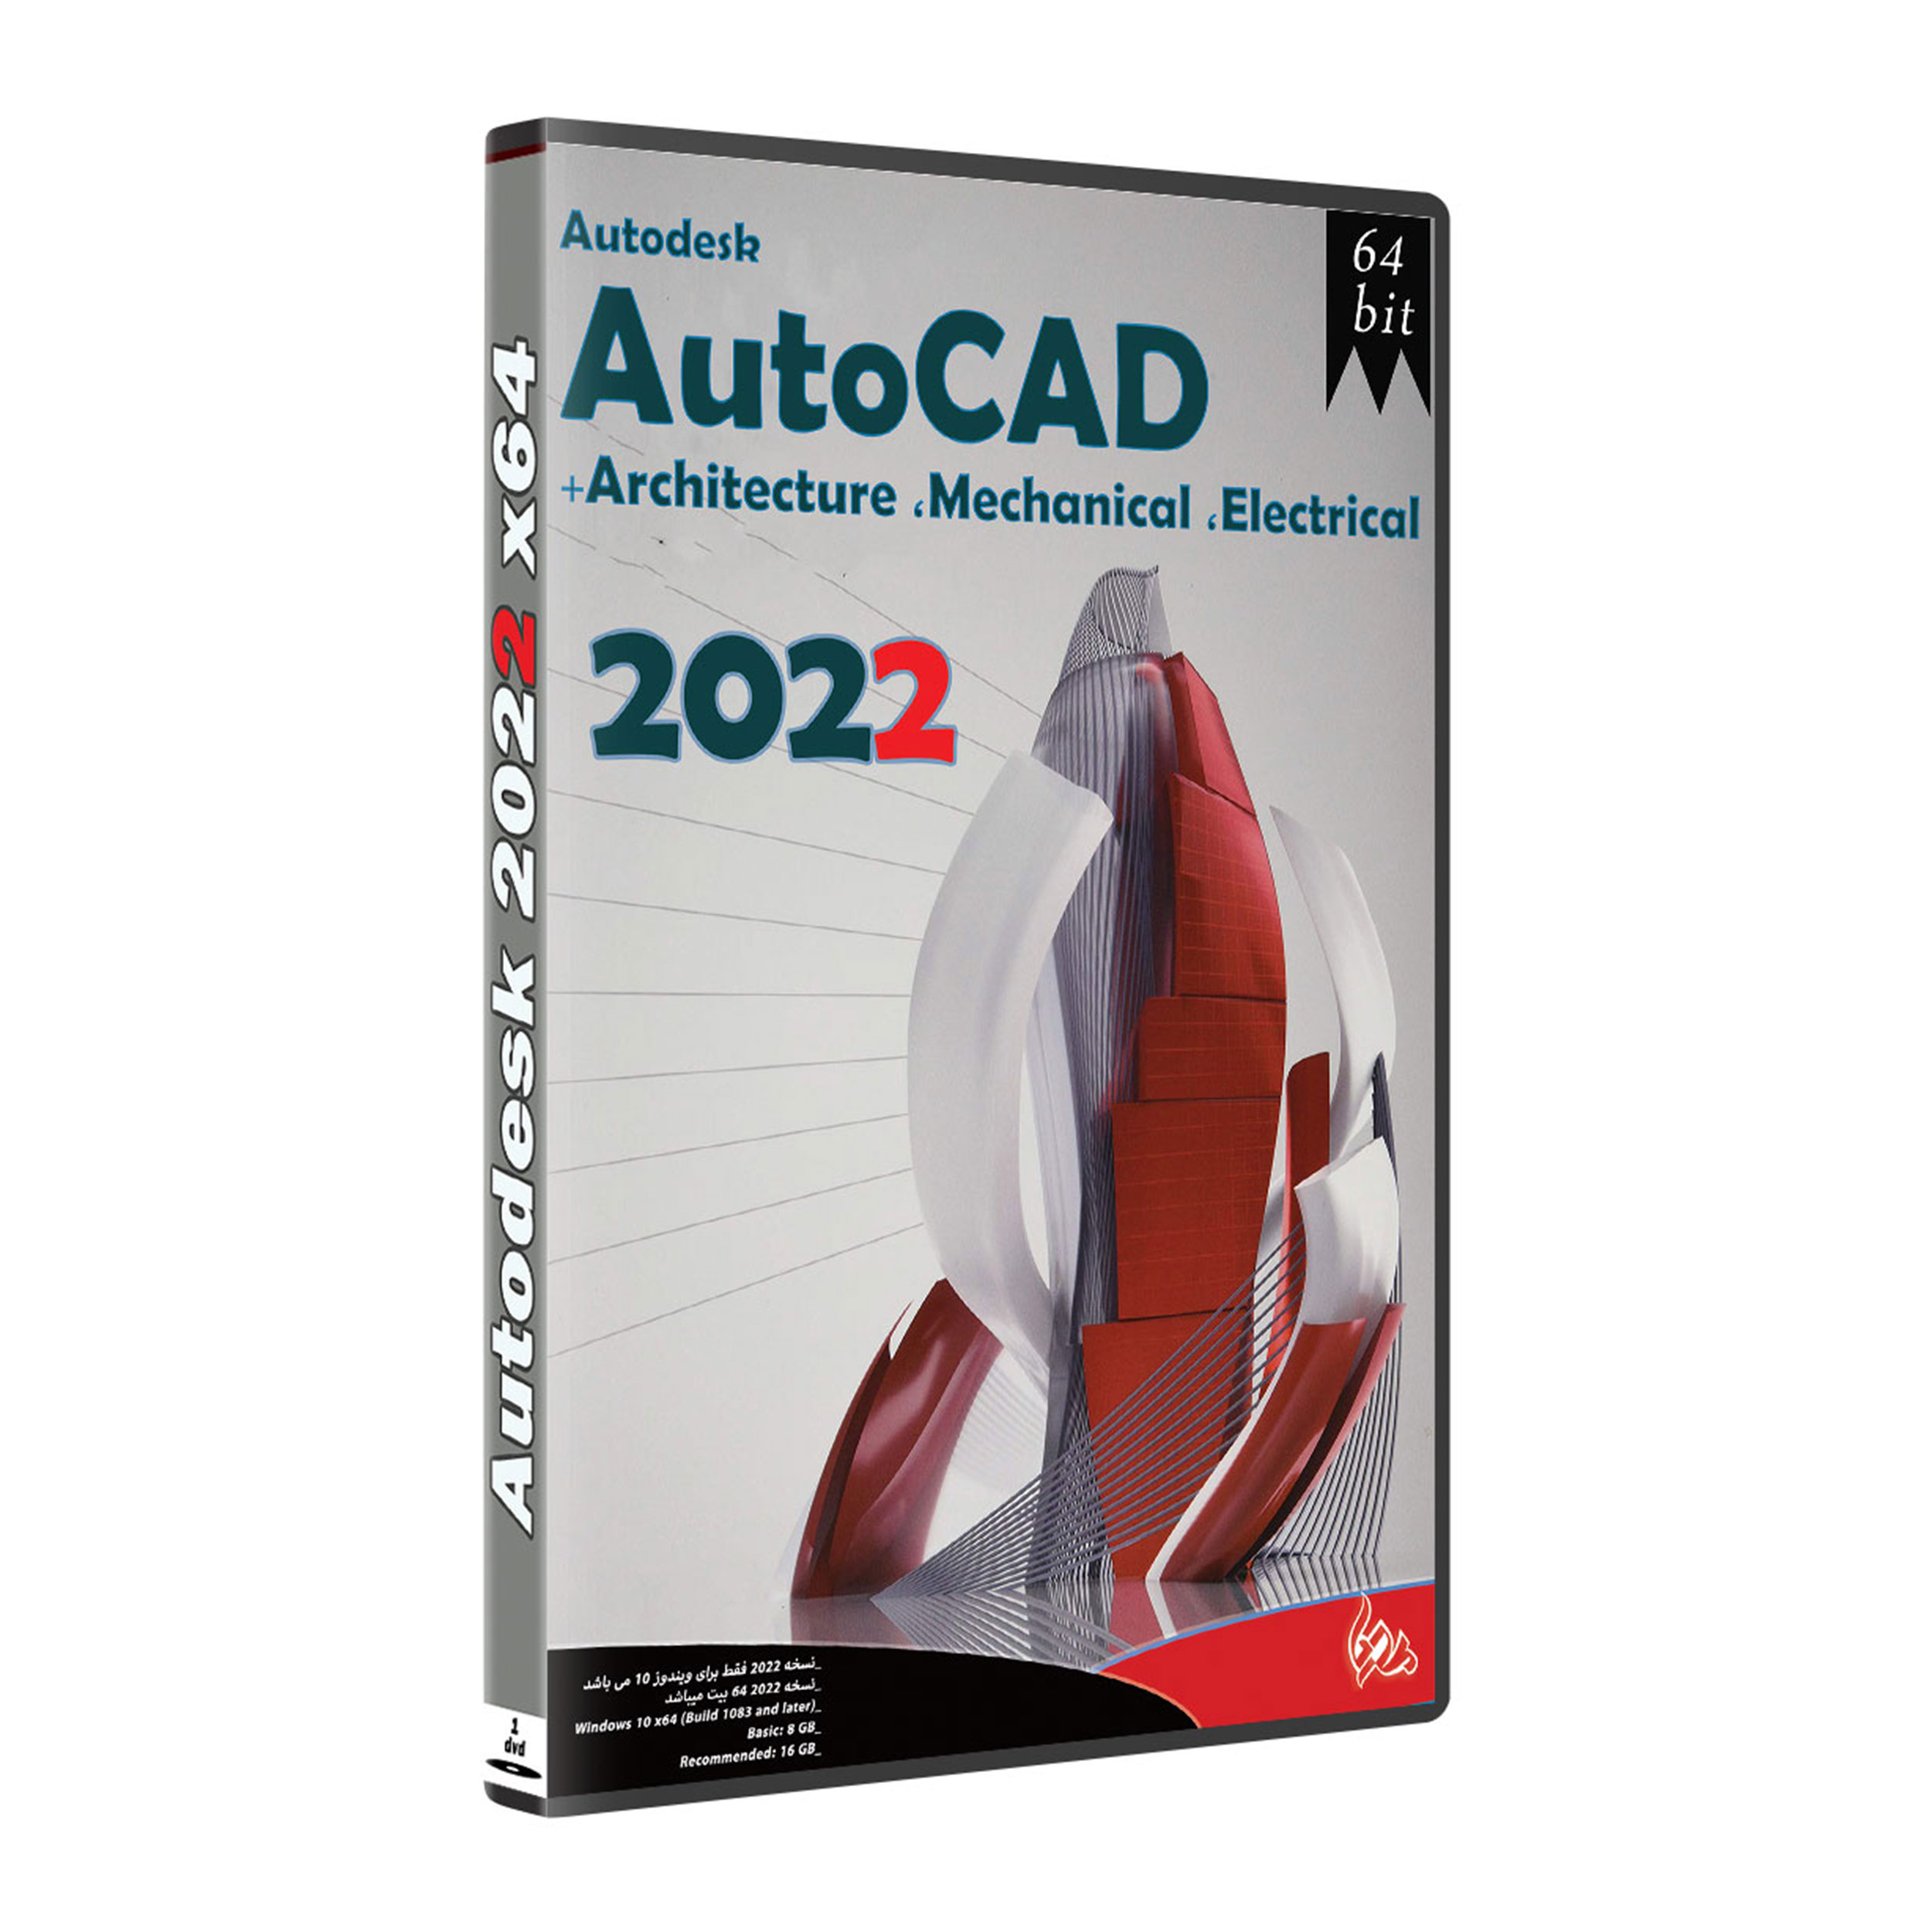 نرم افزار AUTODSK AUTOCAD +  Architectore , Mechanical , Electrical  2022 نشر پدیا